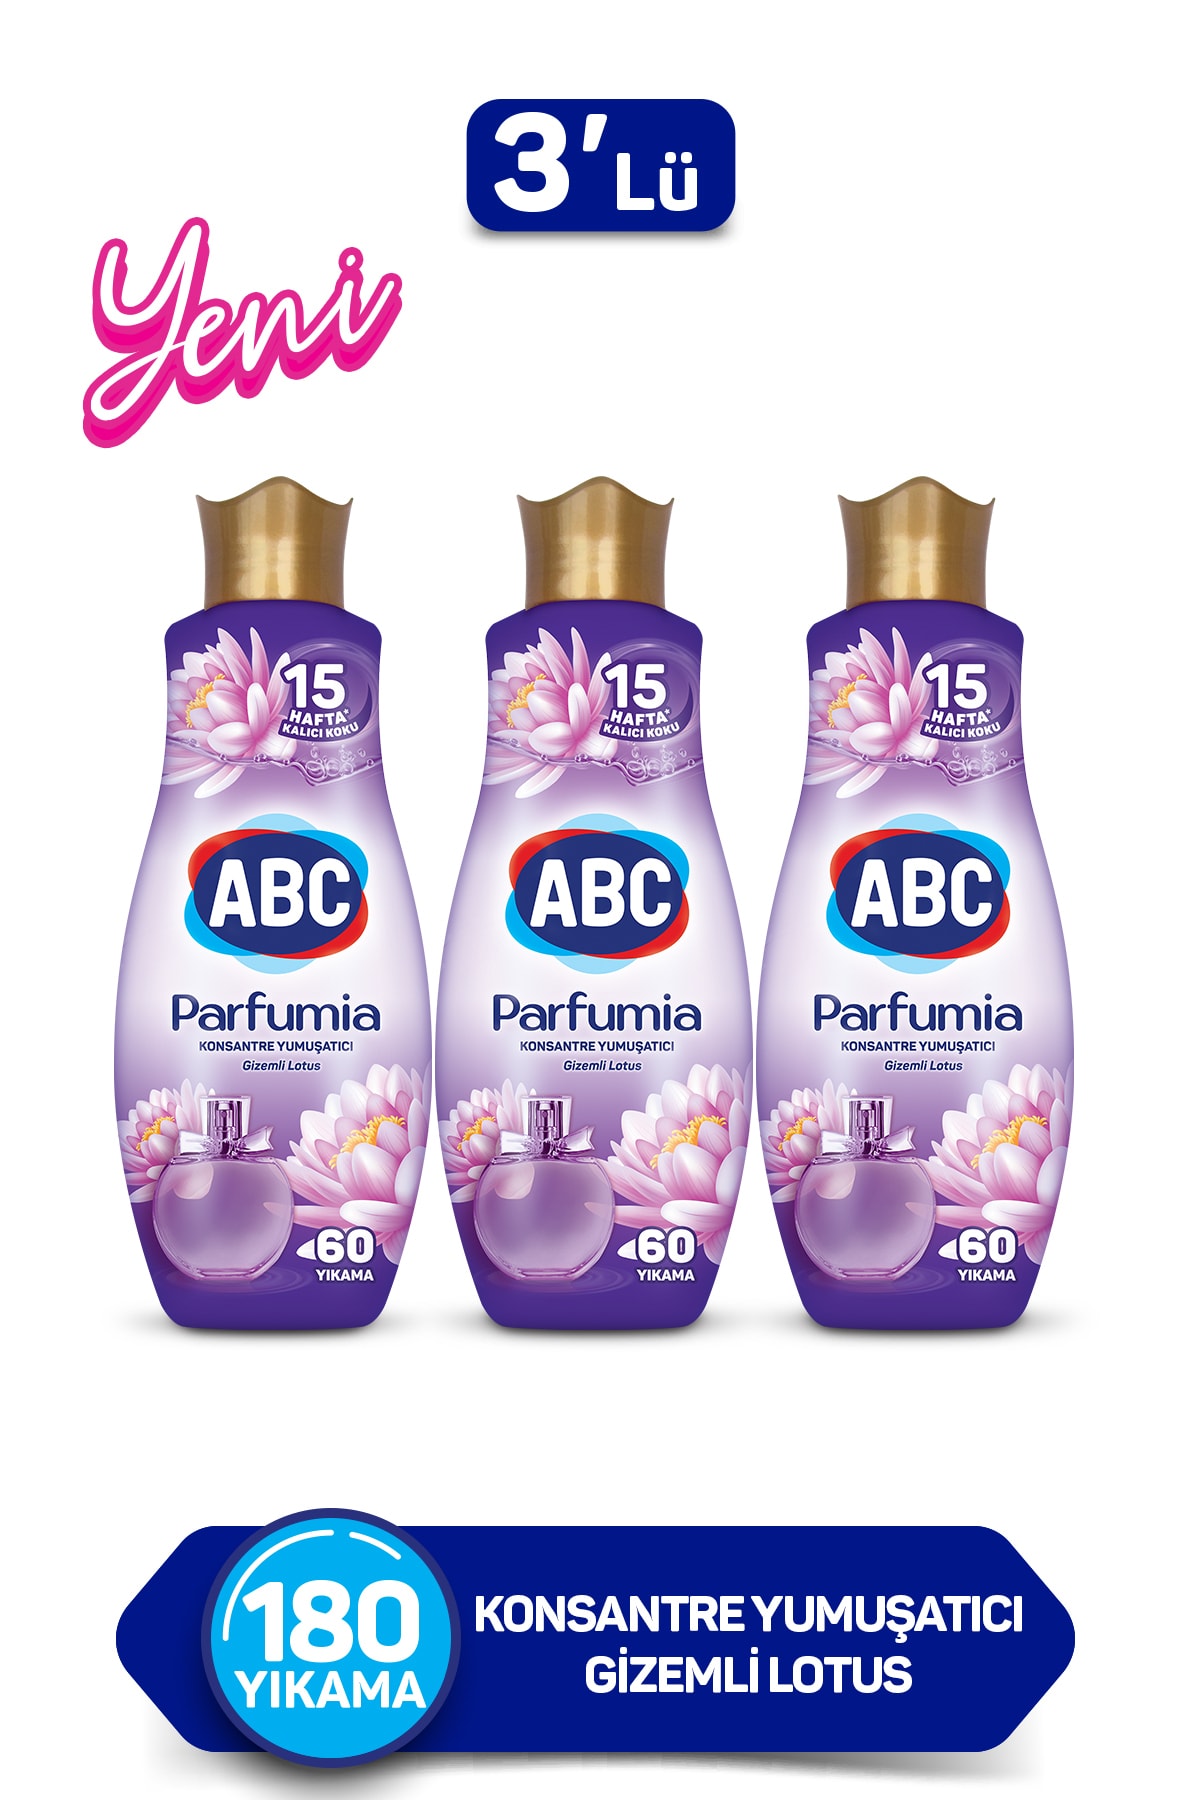 ABC Konsantre Yumuşatıcı Parfumıa Gizemli Lotus 1440 Mlx3 Adet